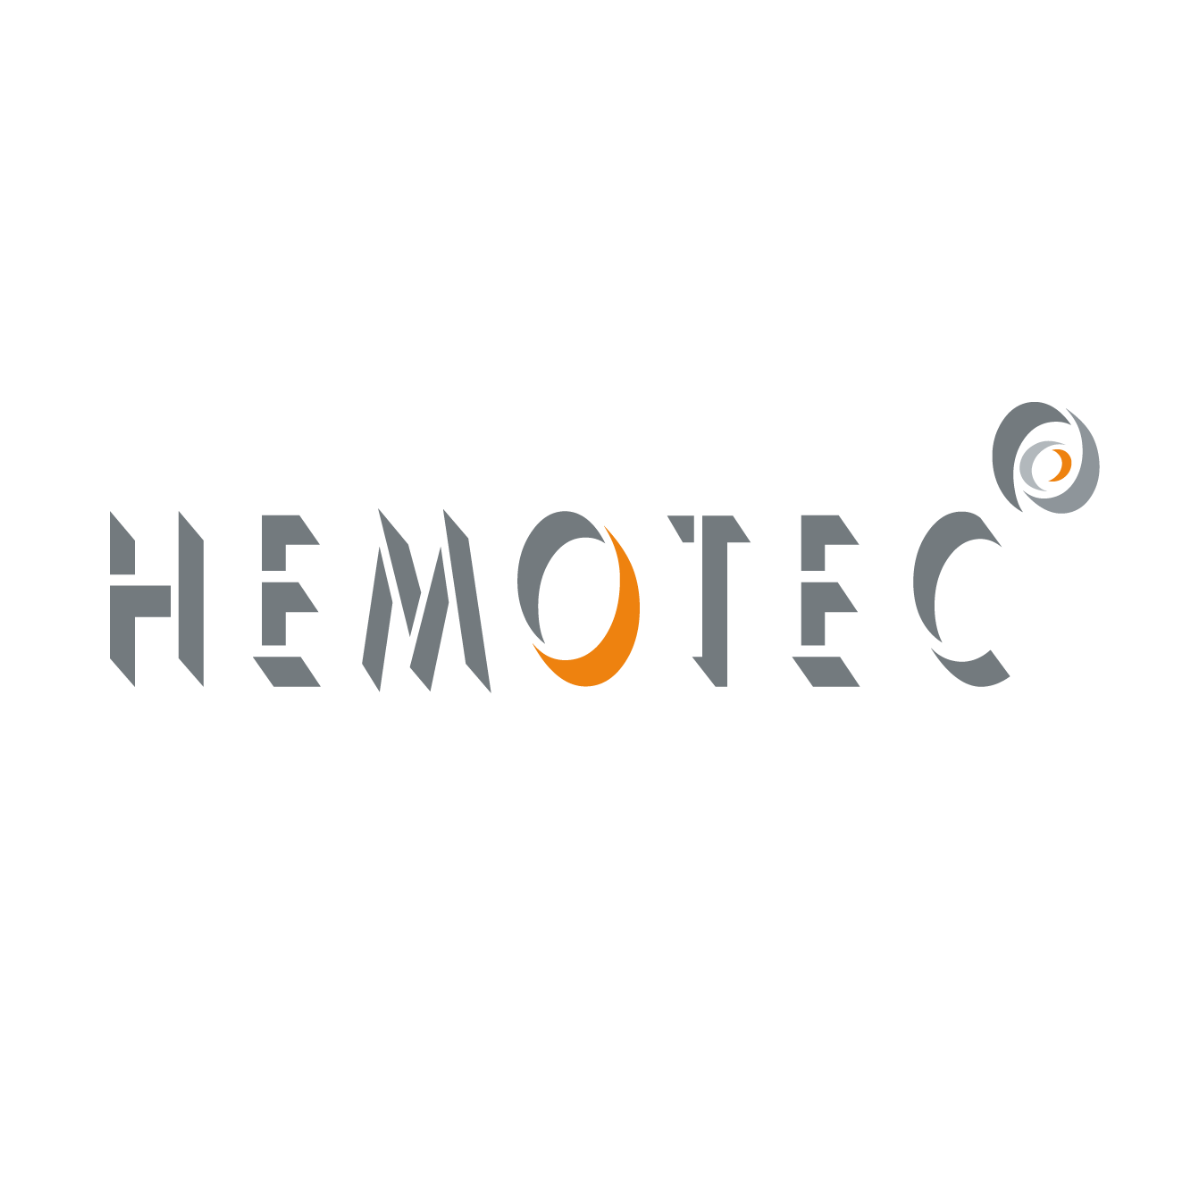 Hemotec-white